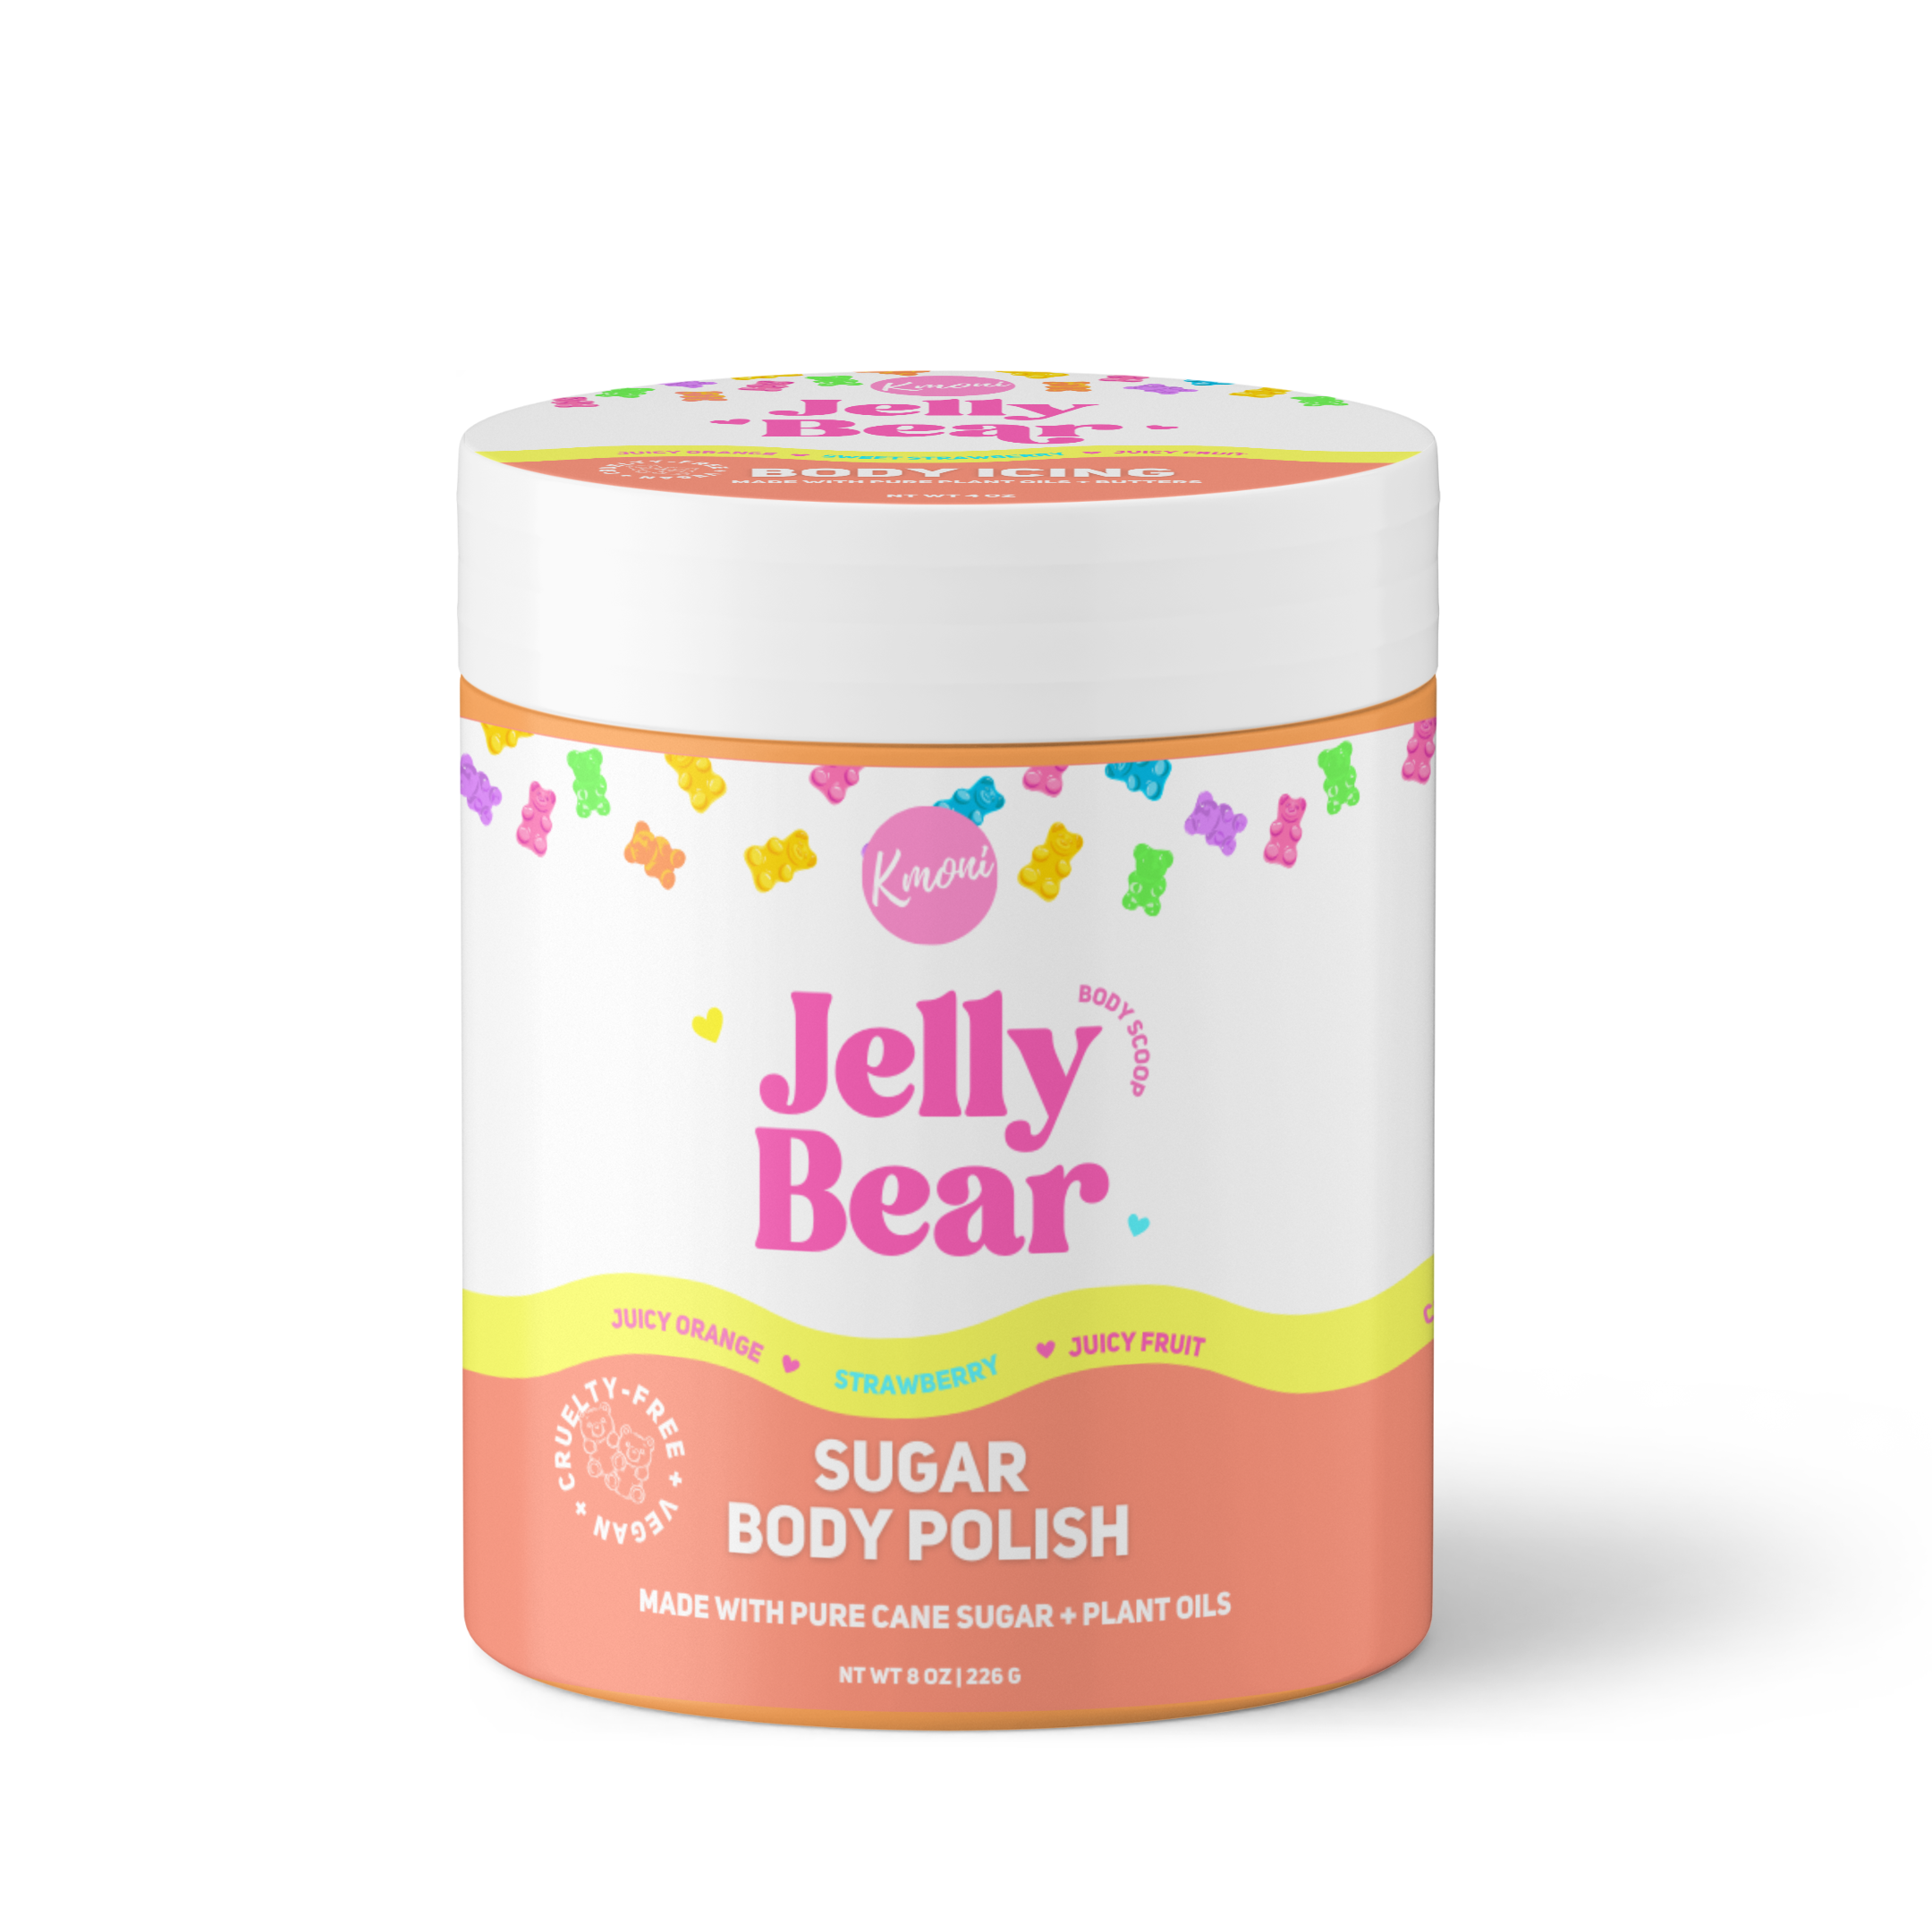 Jelly Bear Sugar Body Polish